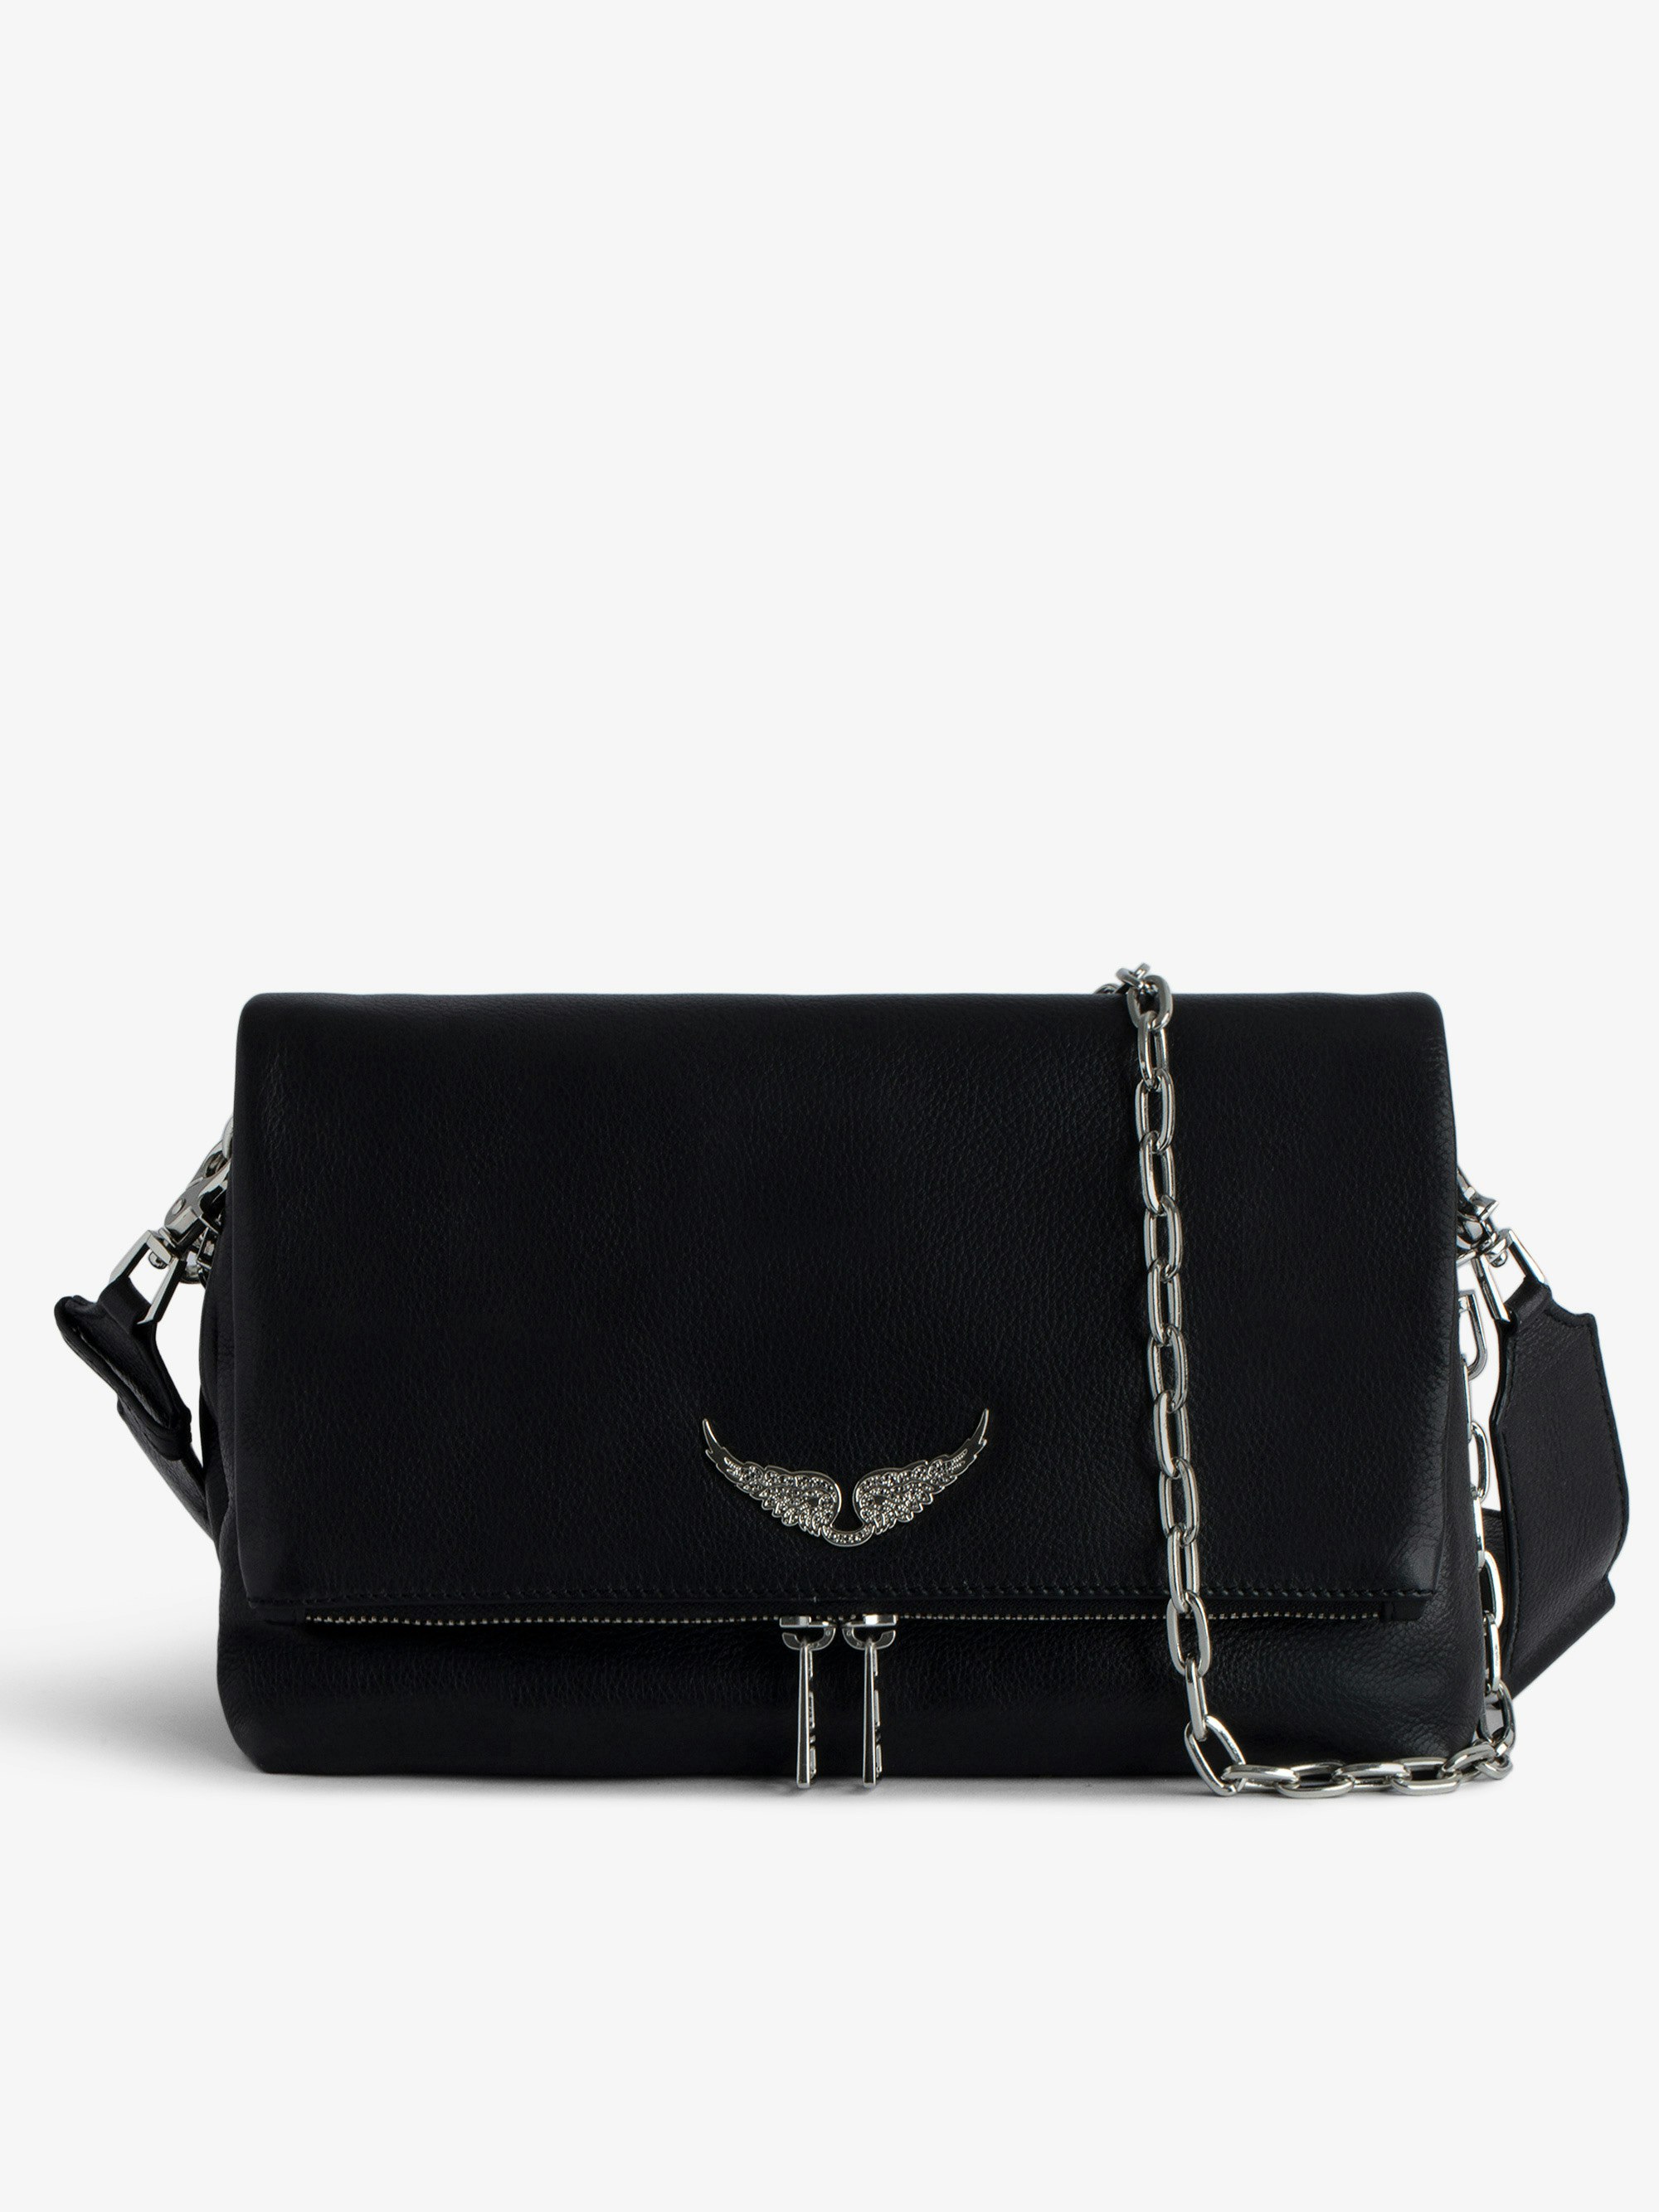 Rocky Bag - Black leather bag for women.